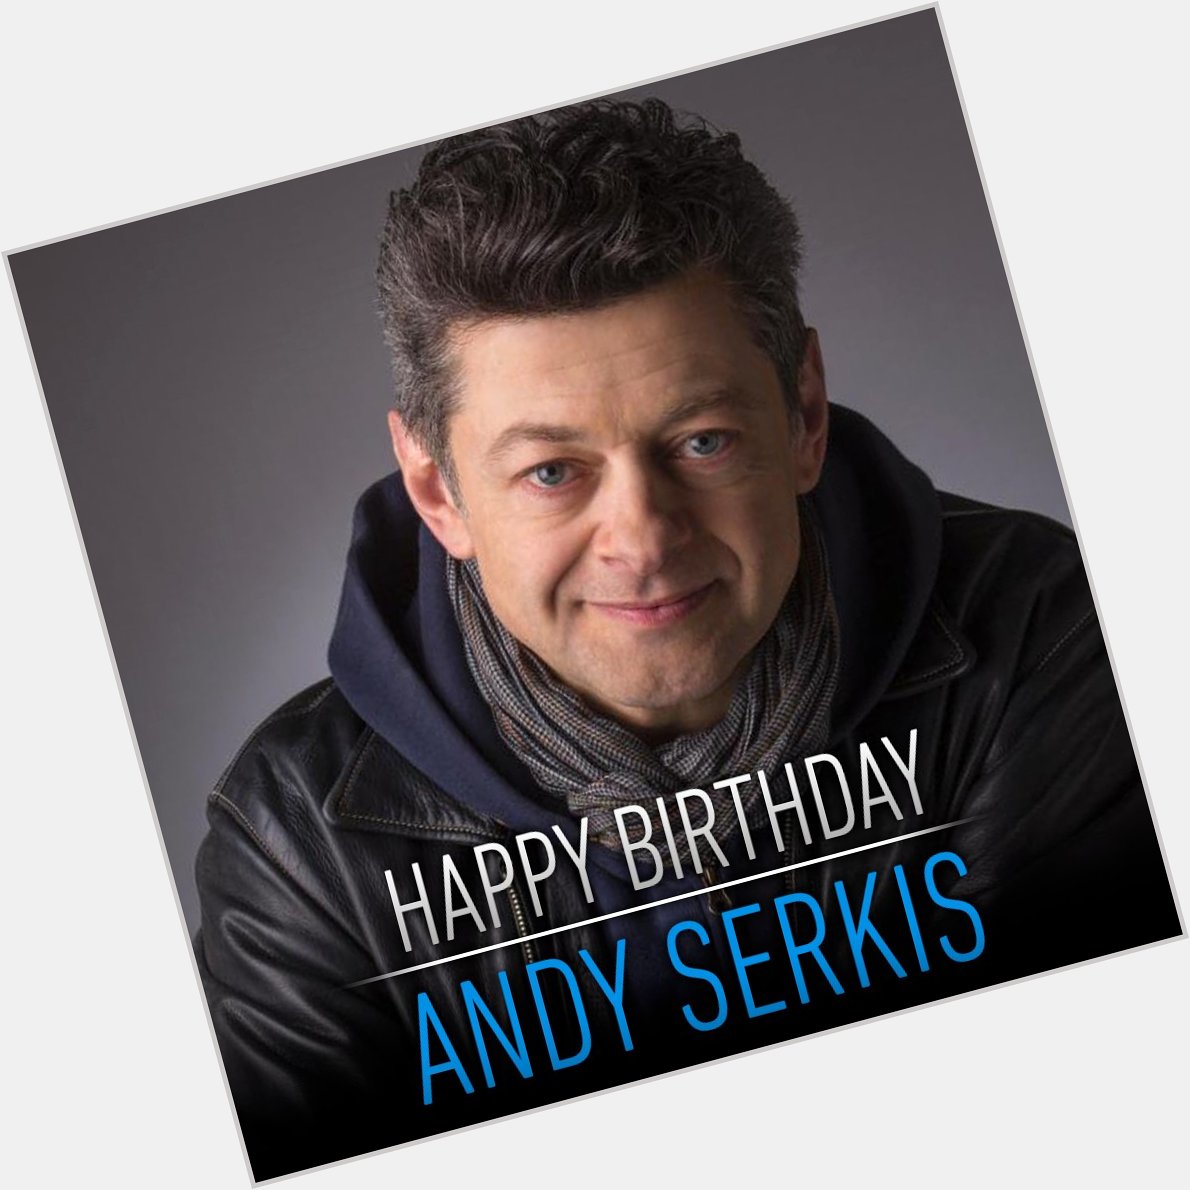 Happy birthday Andy Serkis, de man achter Supreme Leader Snoke. 